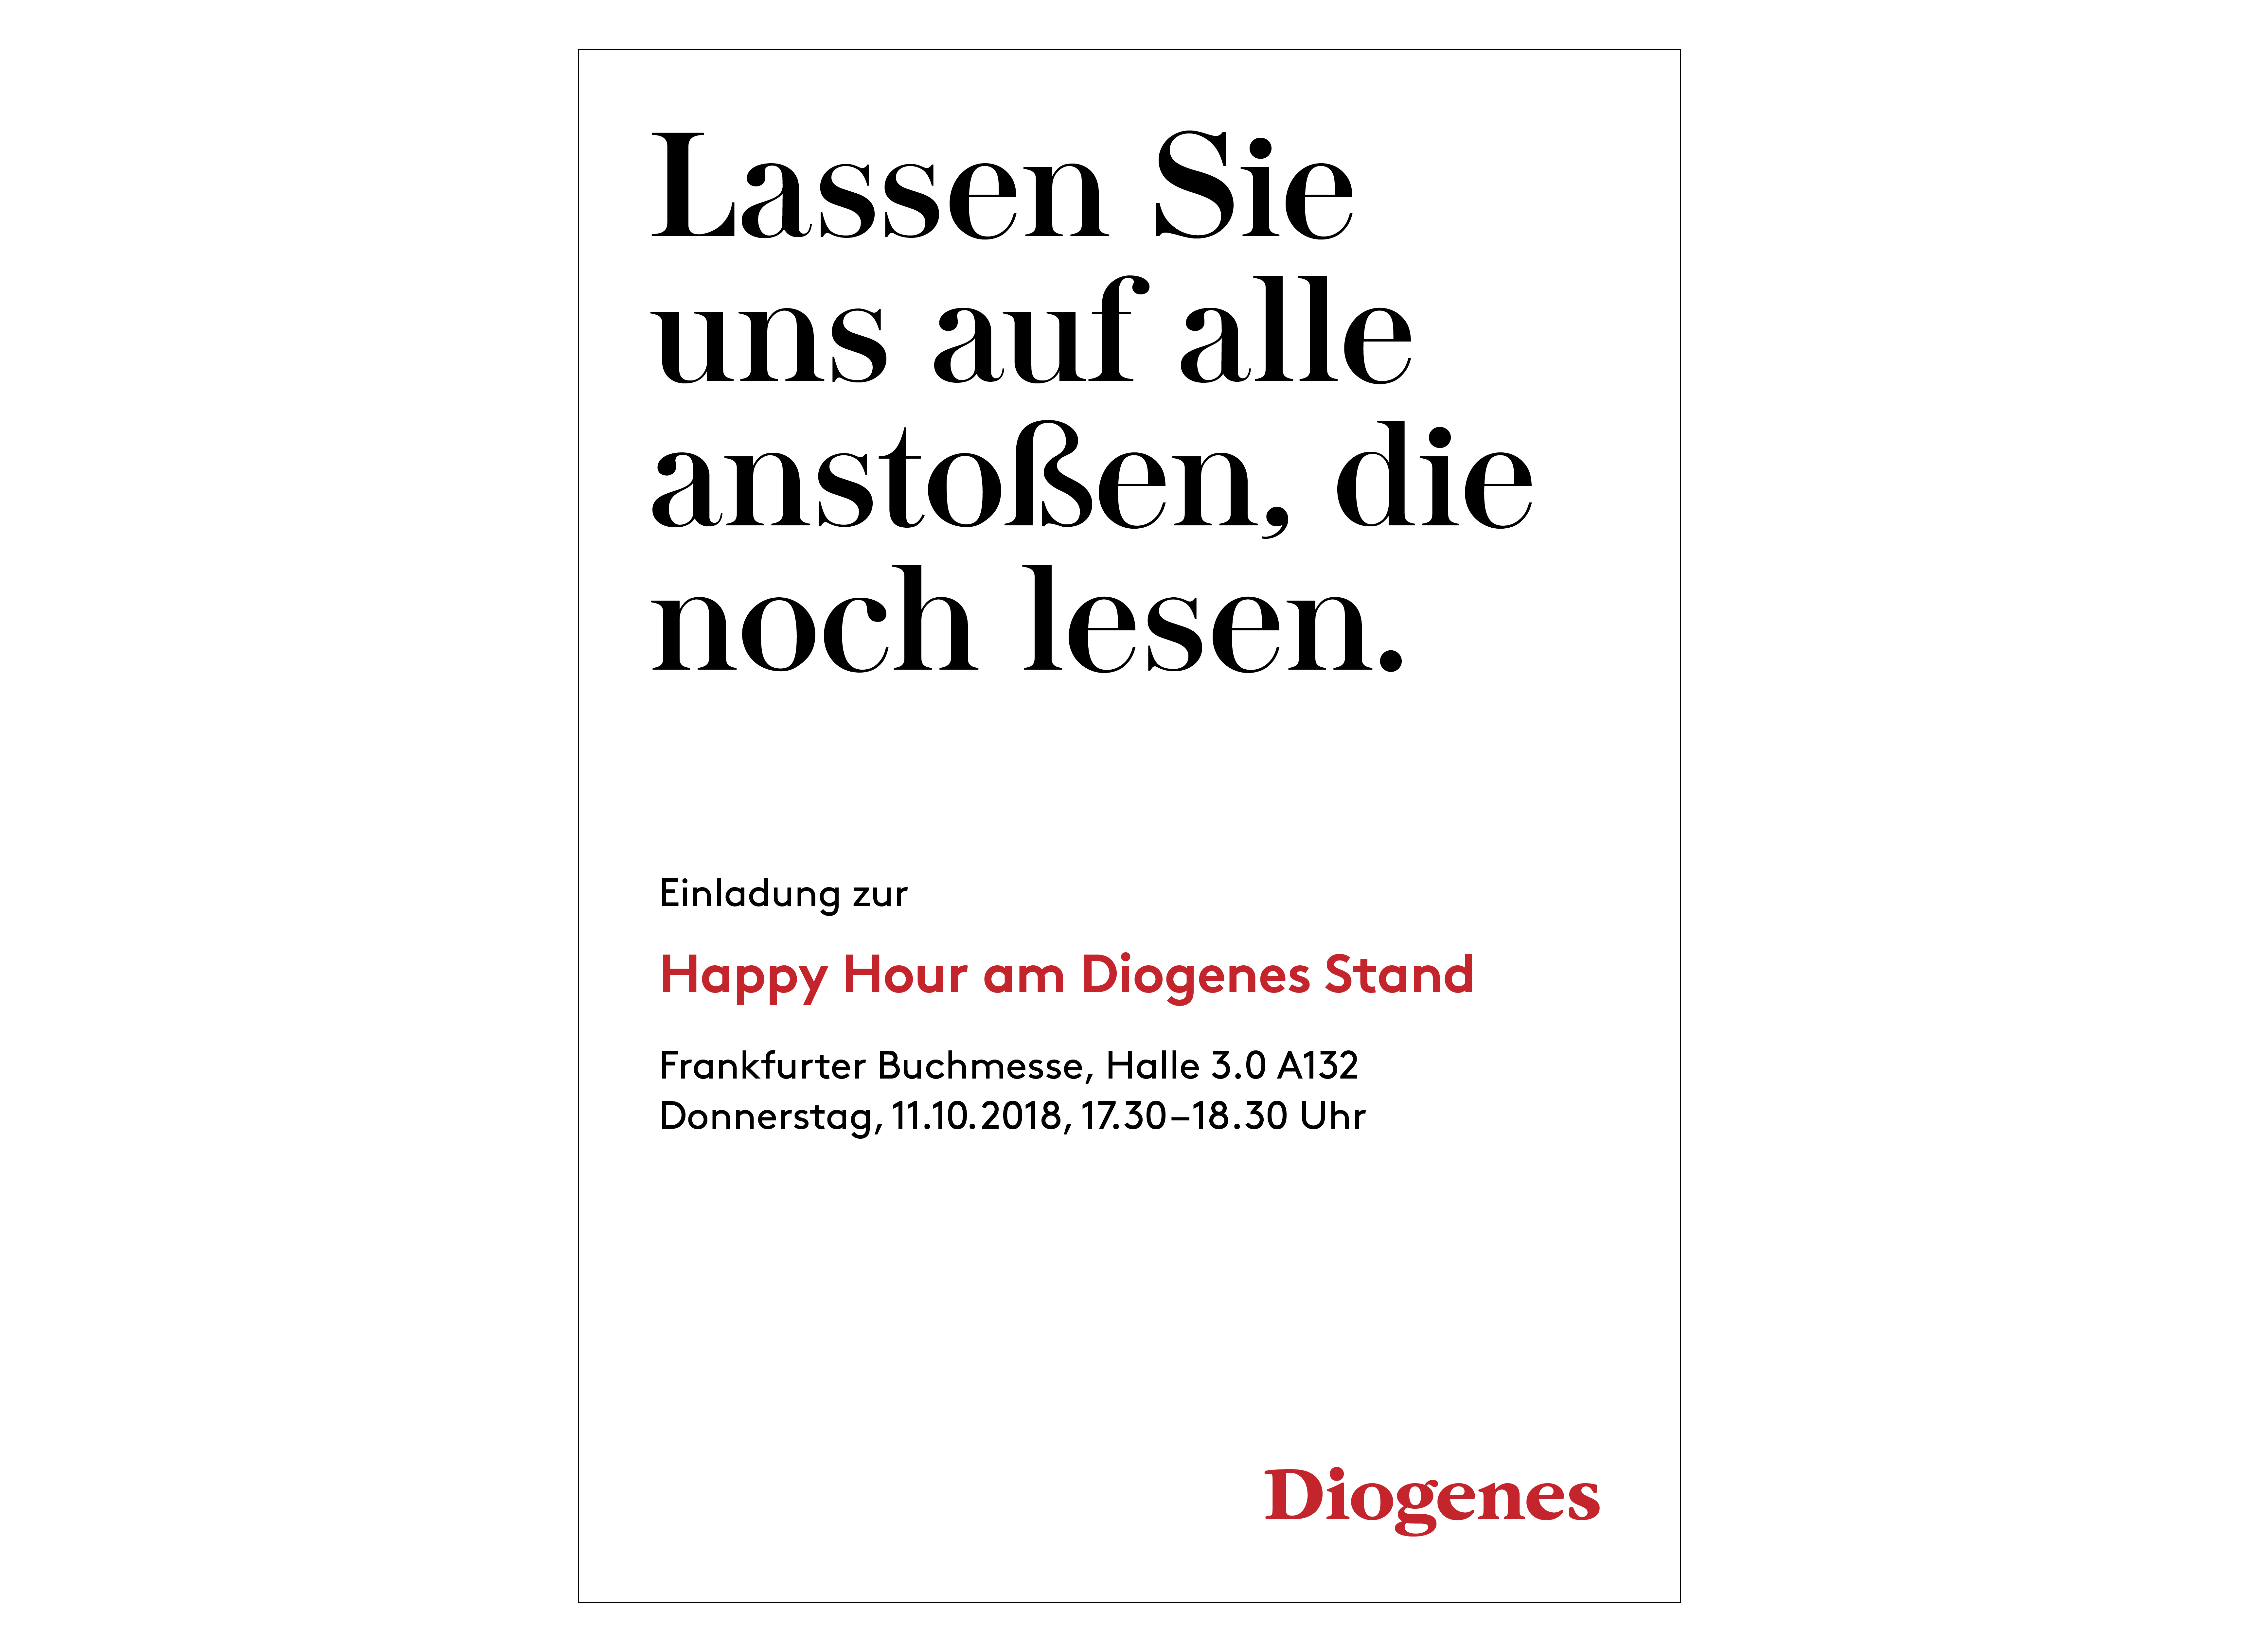 Diogenes Einladung / Happy Hour in Frankfurt